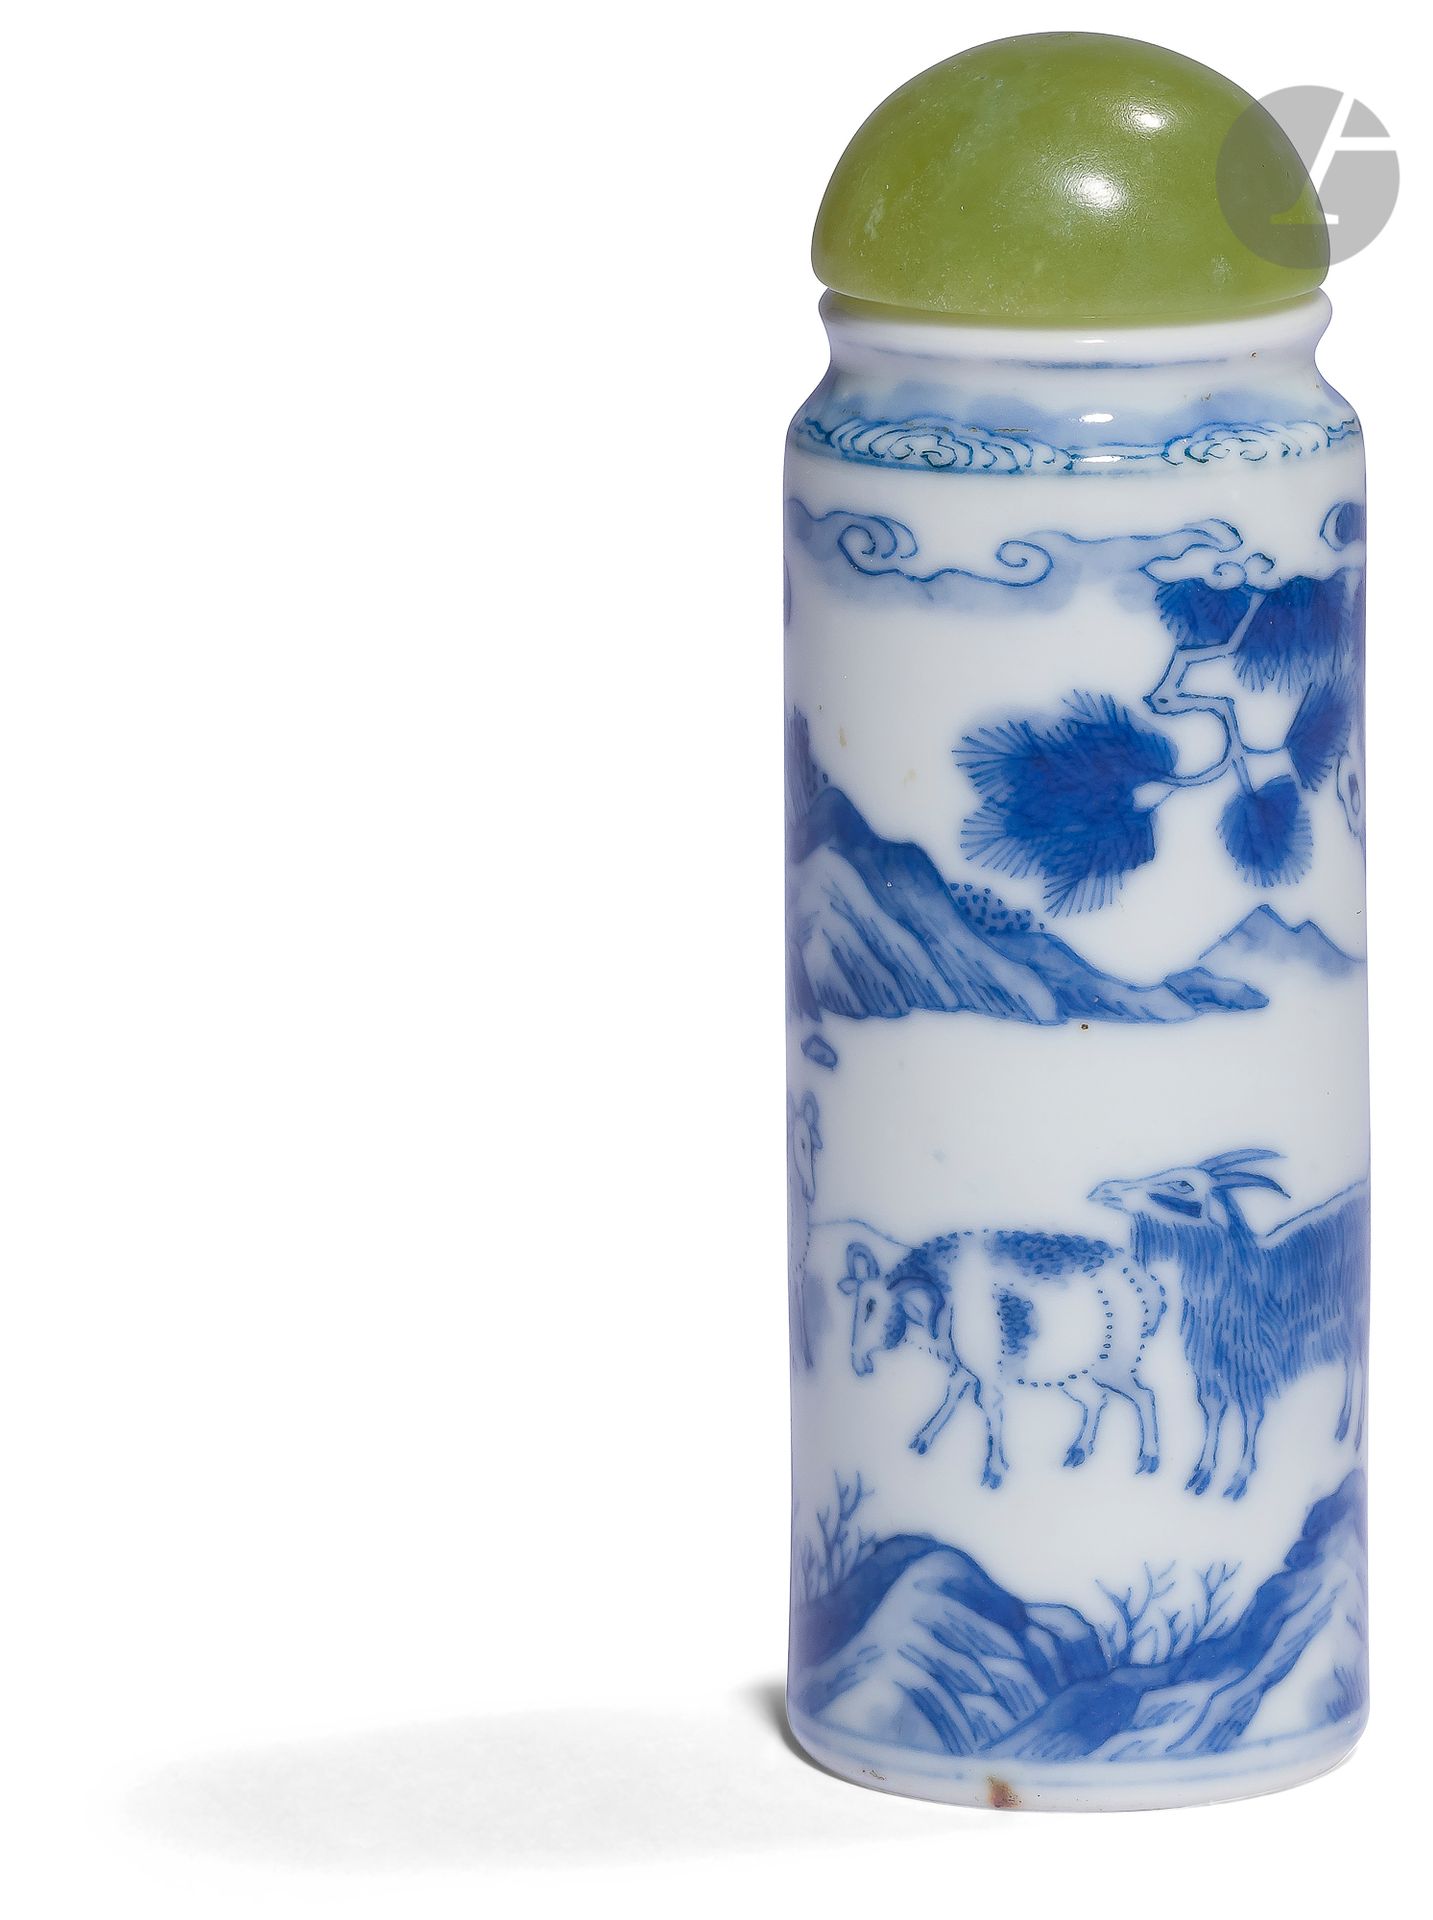 Null Tabacchiera in porcellana bianca e blu, Cina, XIX
secoloFlacone in porcella&hellip;